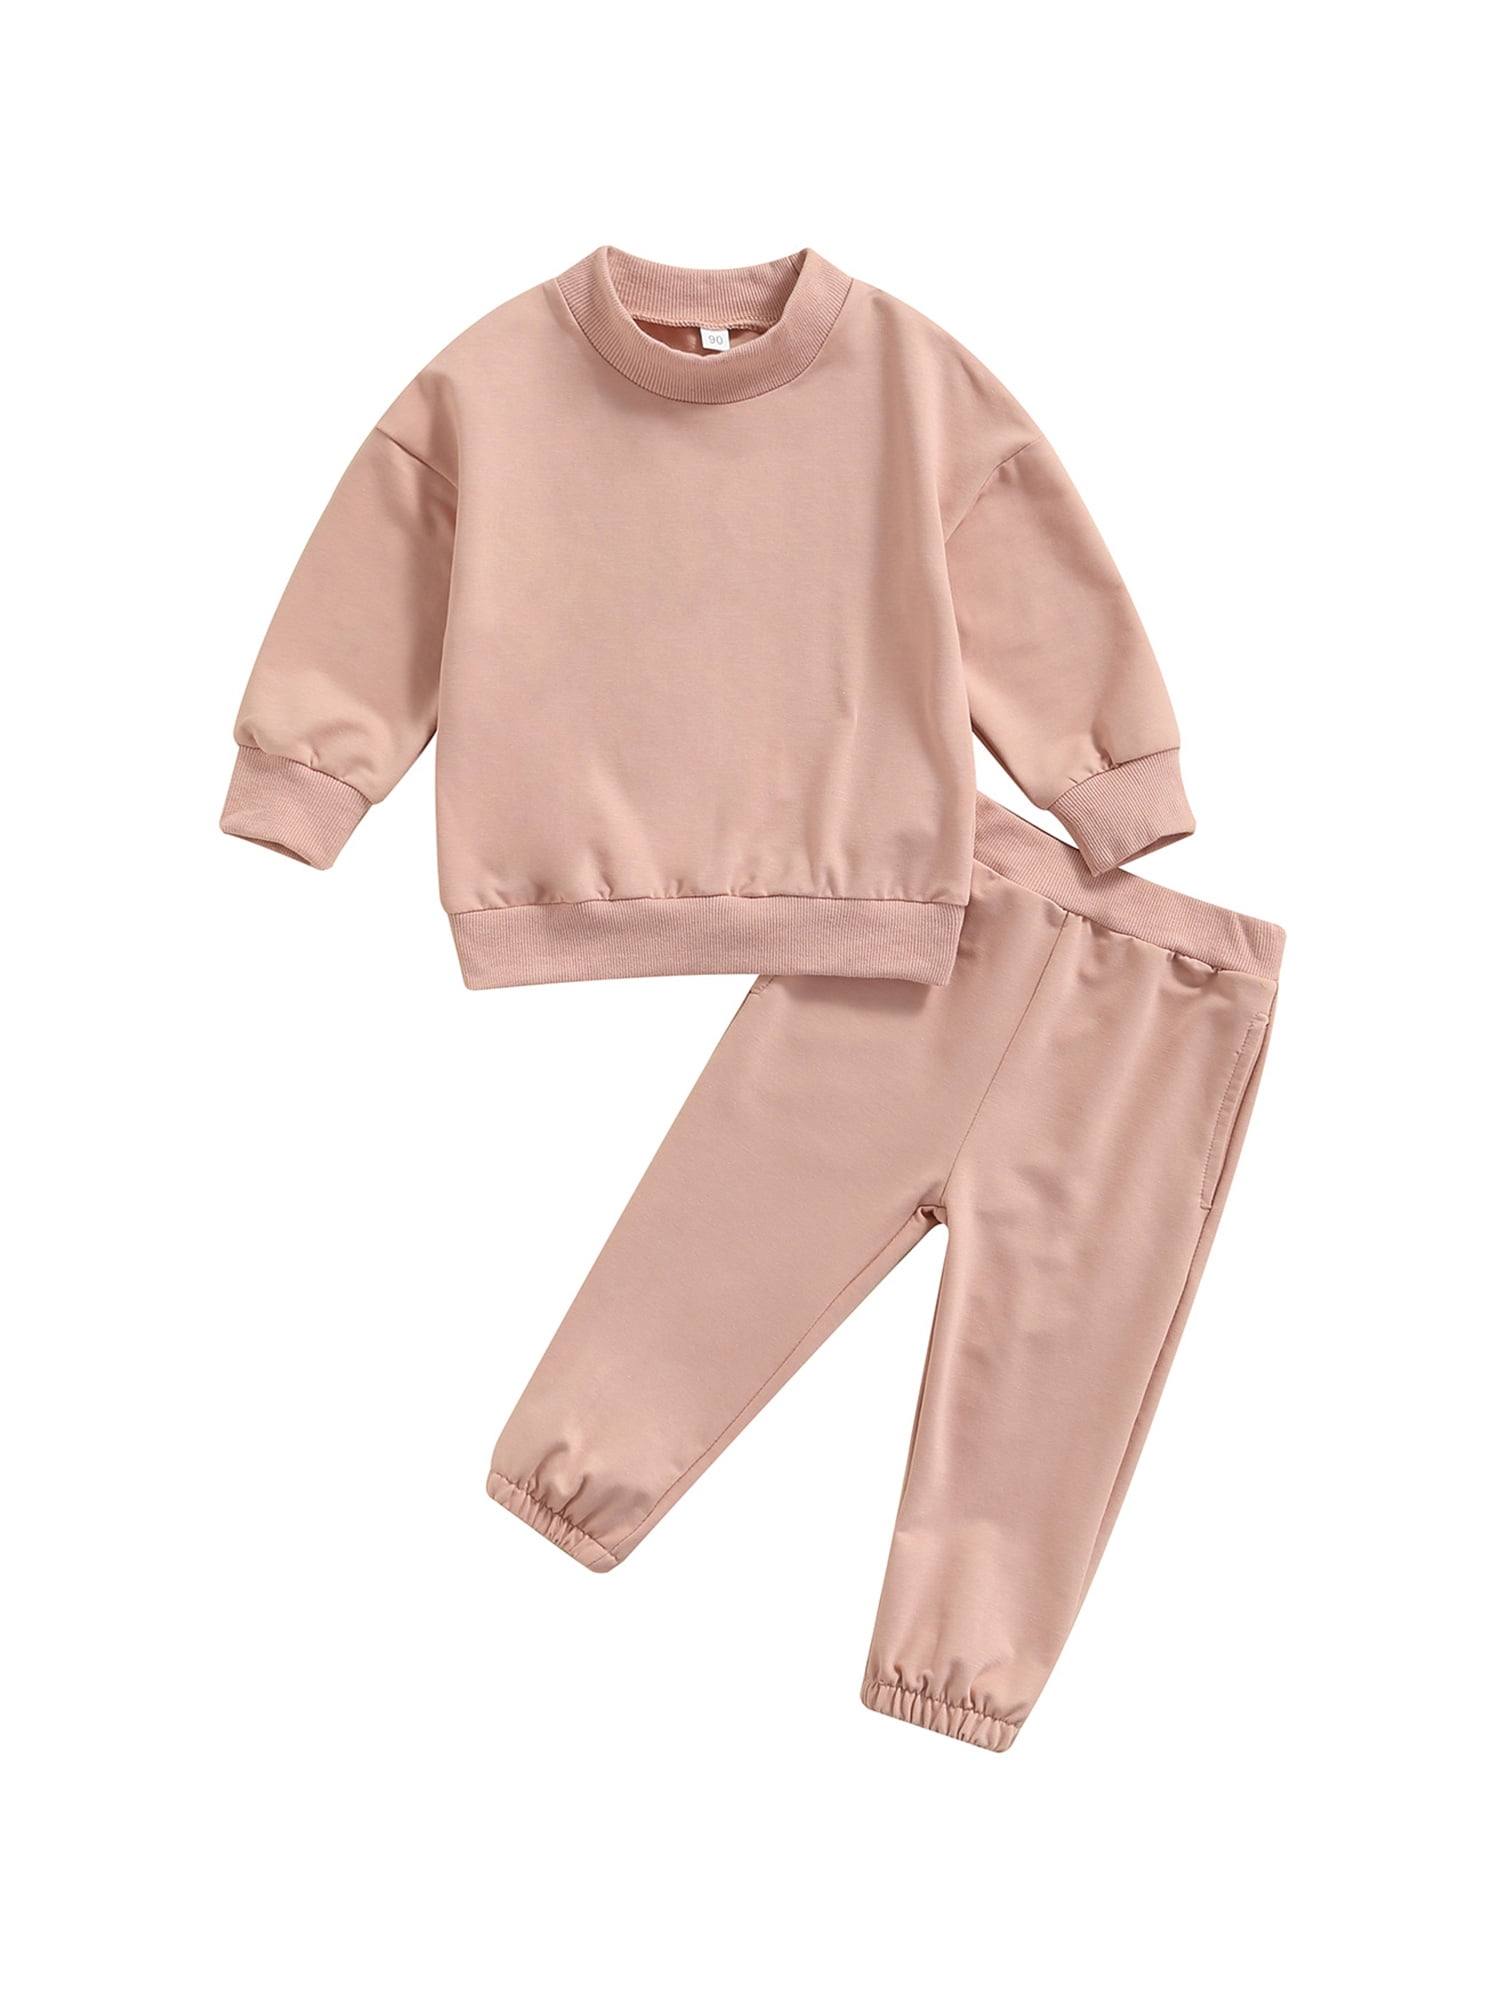 Baby Girl Boy Clothes Set Solid Long Sleeve Sweatshirt Top Pants Unisex Newborn Fall Winter Pajamas Outfits